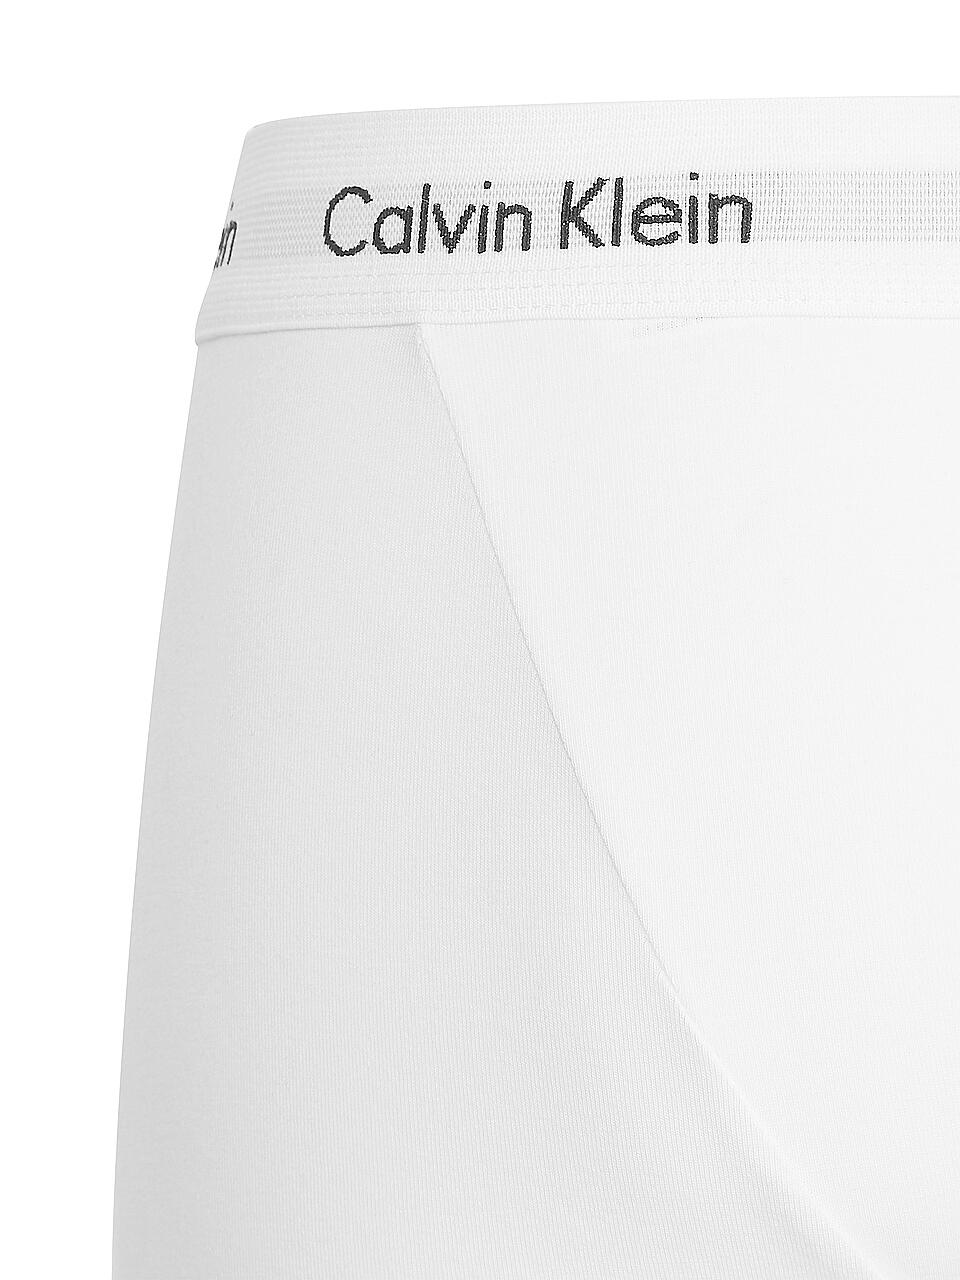 CALVIN KLEIN | Pant 3-er Pkg weiss | weiß